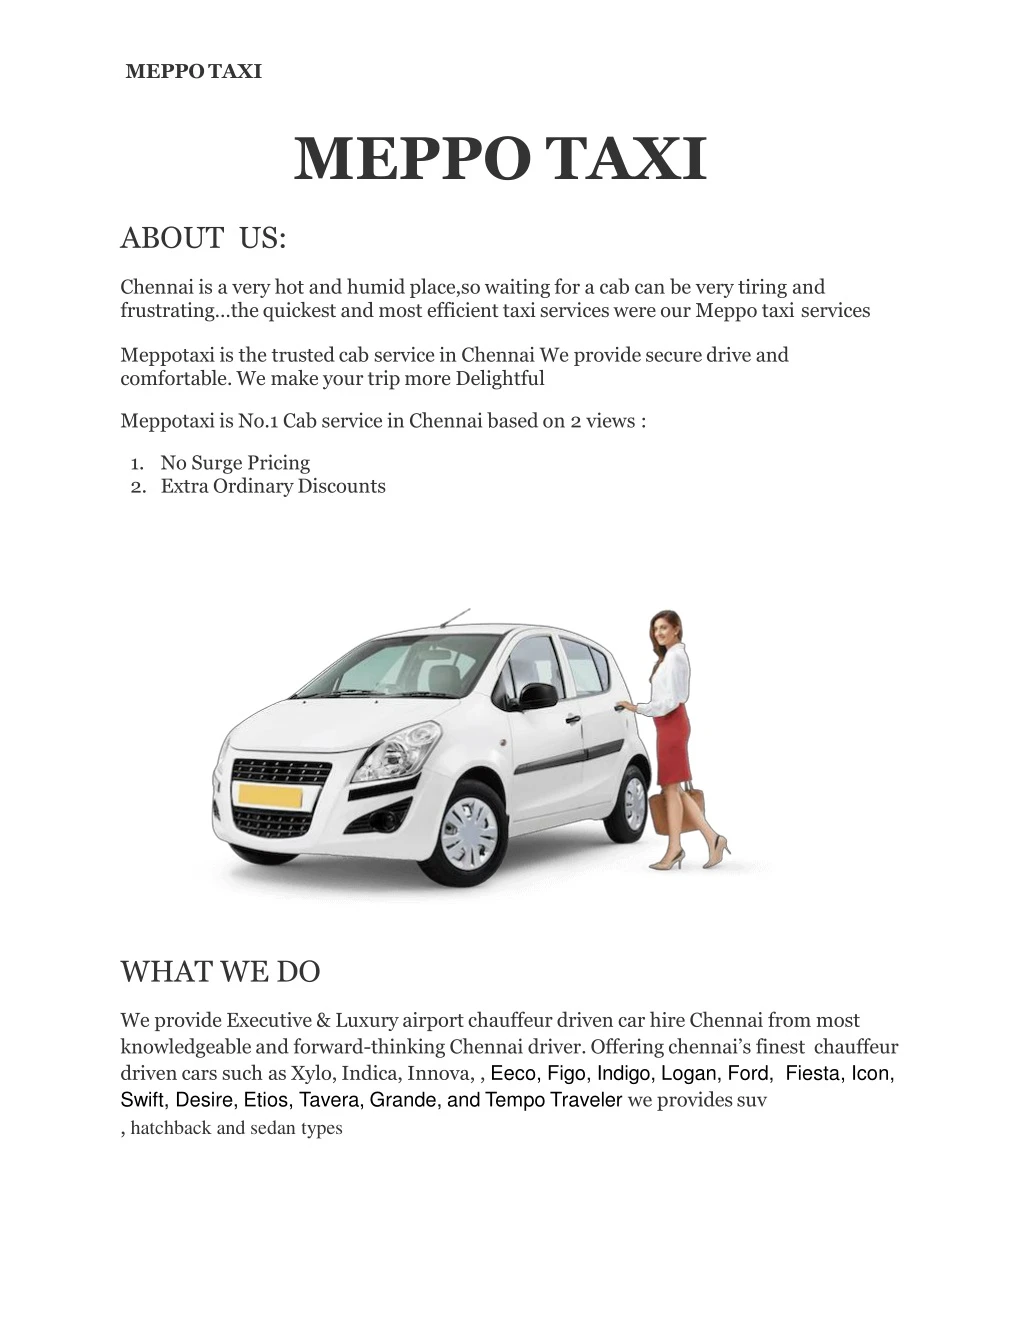 meppo taxi